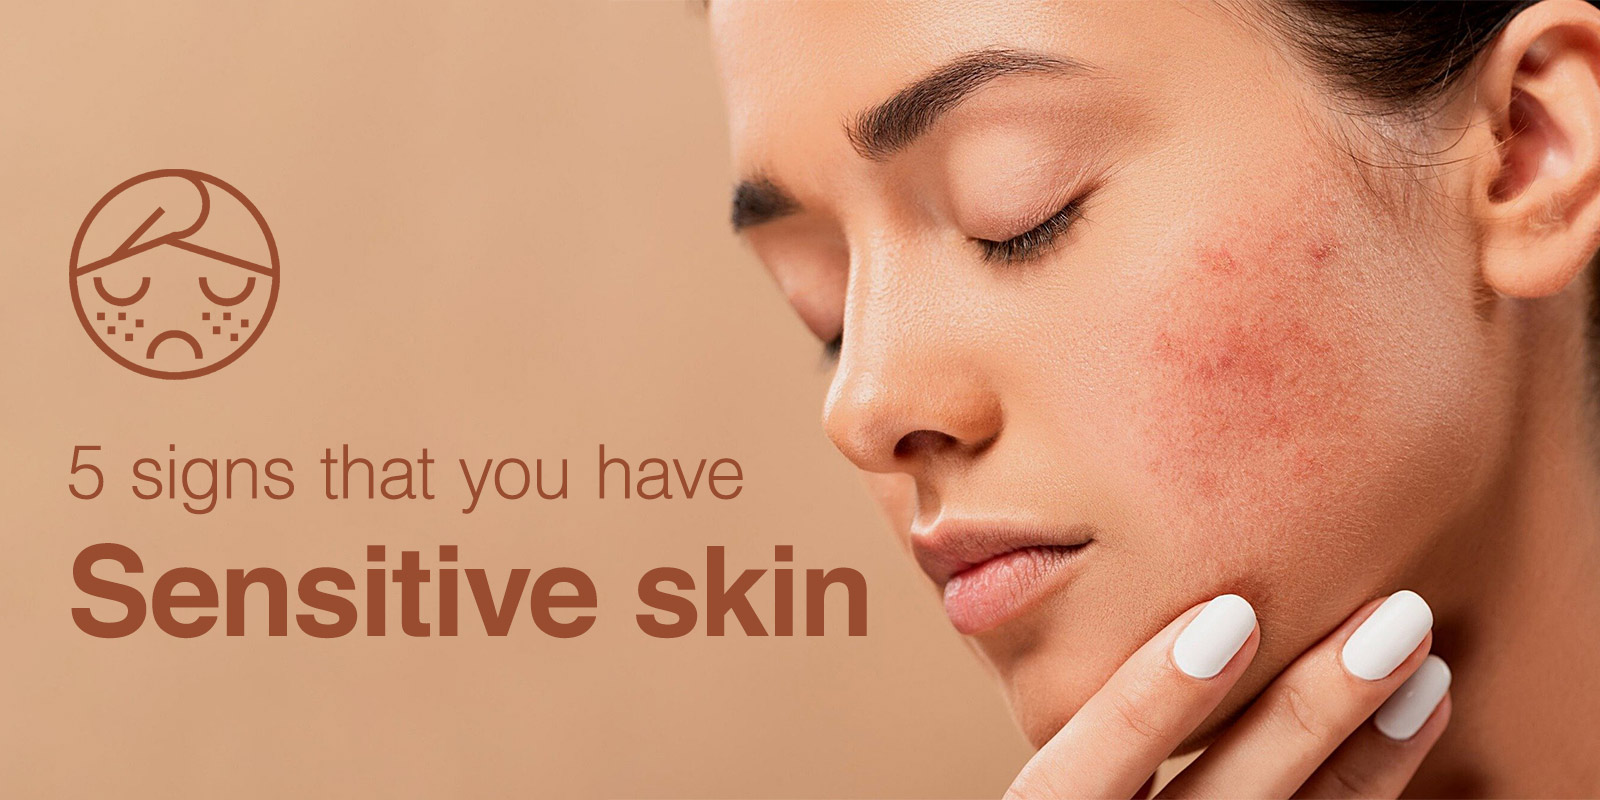 5 signs you have sensitive skin